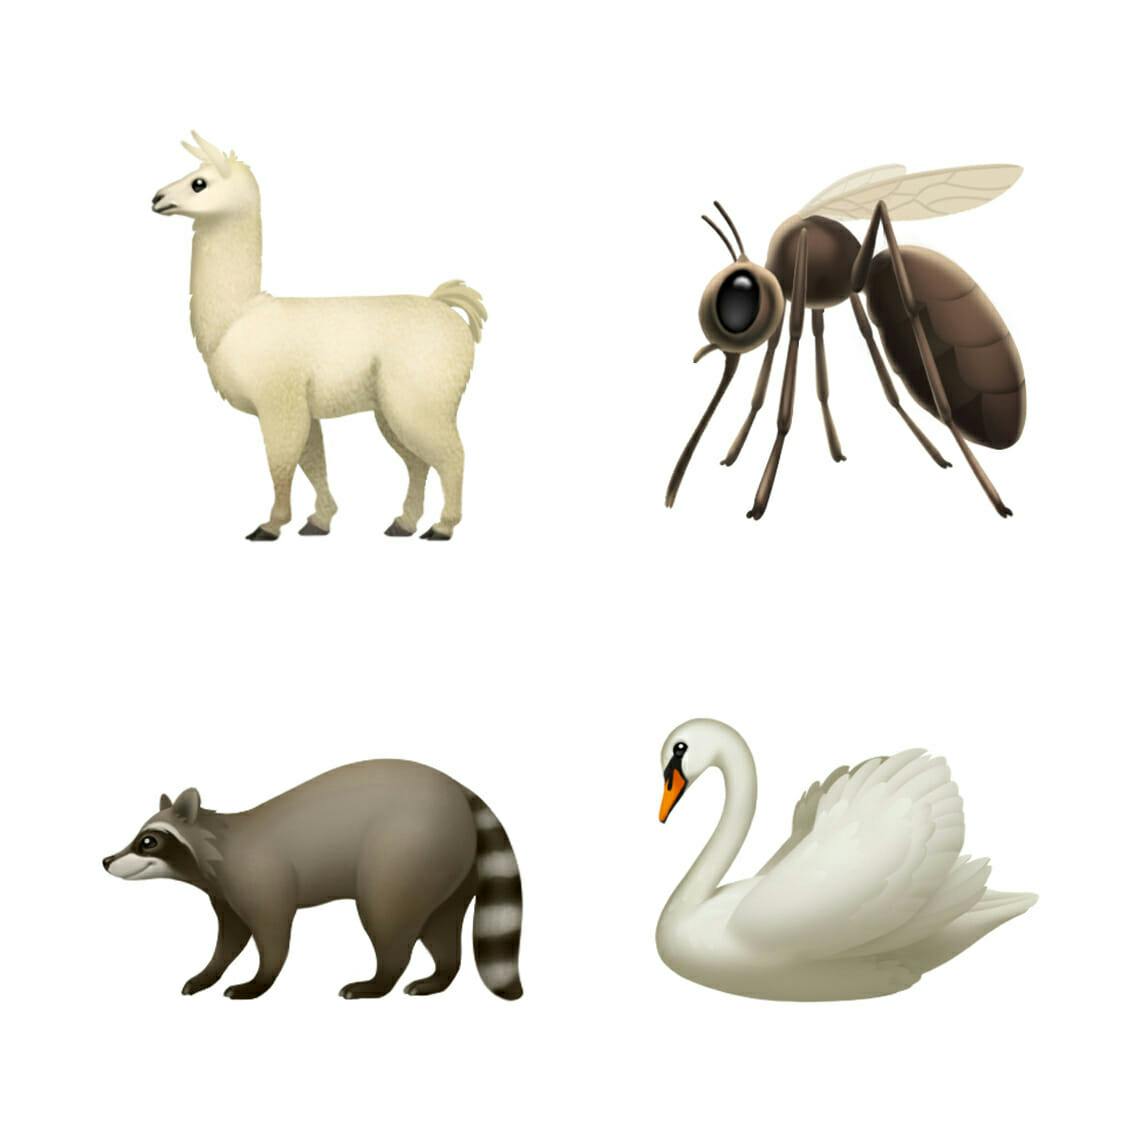 iOS 12.1's update includes new animal emoji